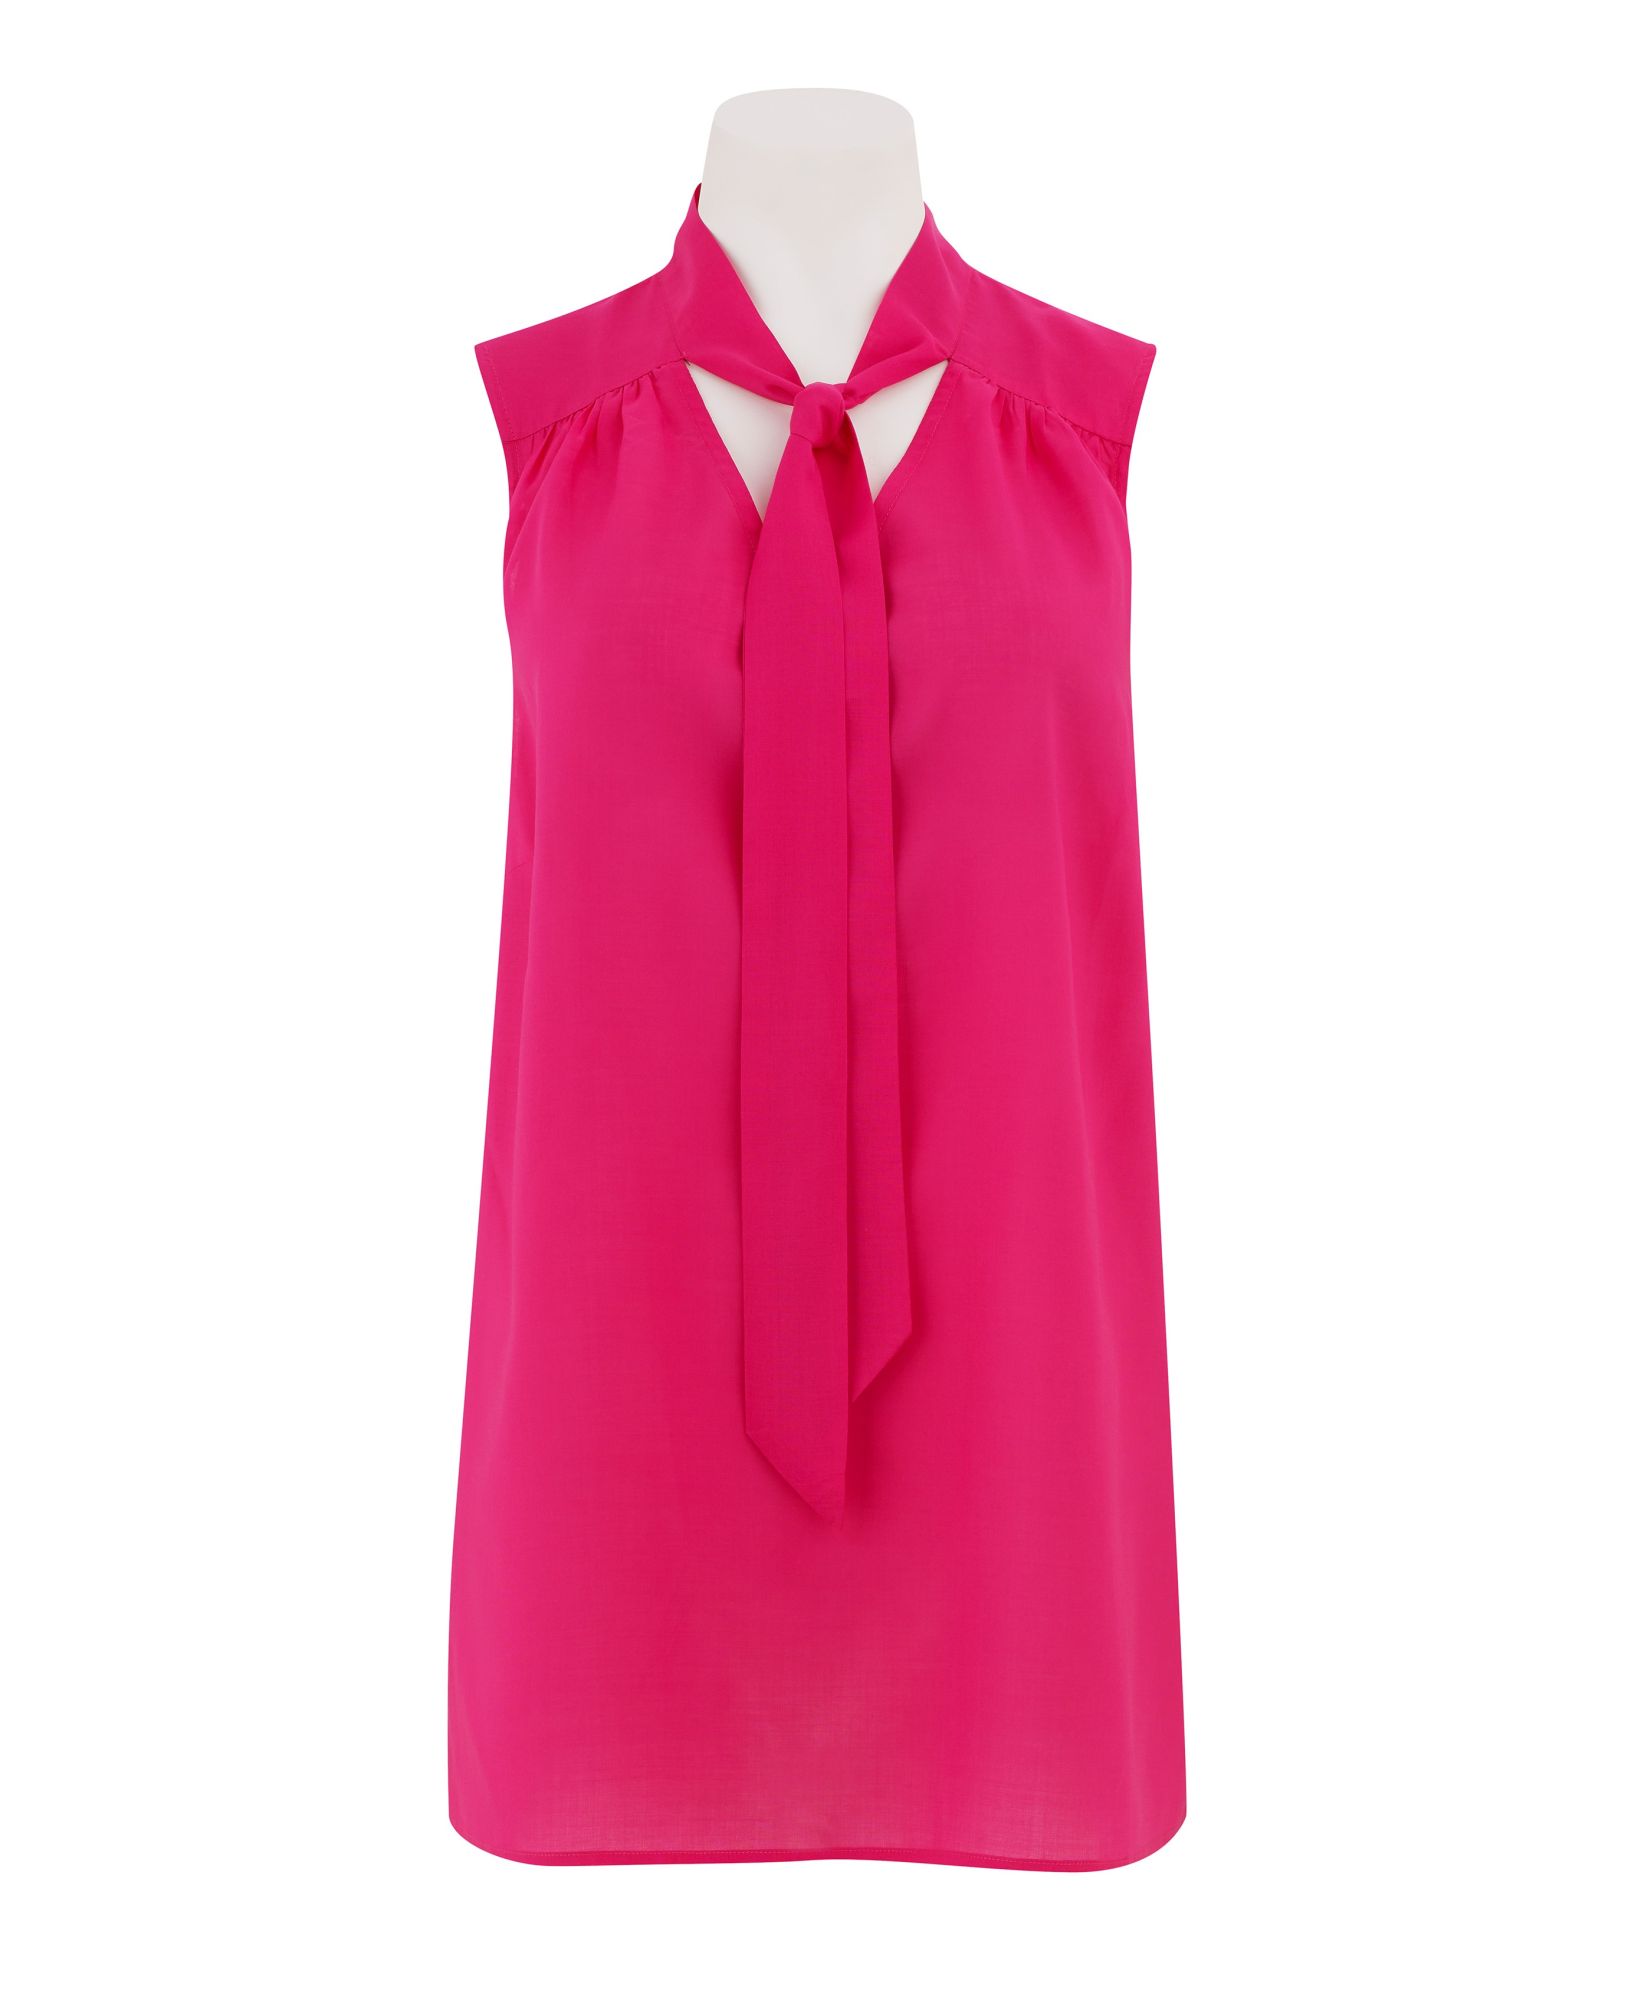 Women's Cerise Pink Sleeveless Tie-Neck Shirt 12